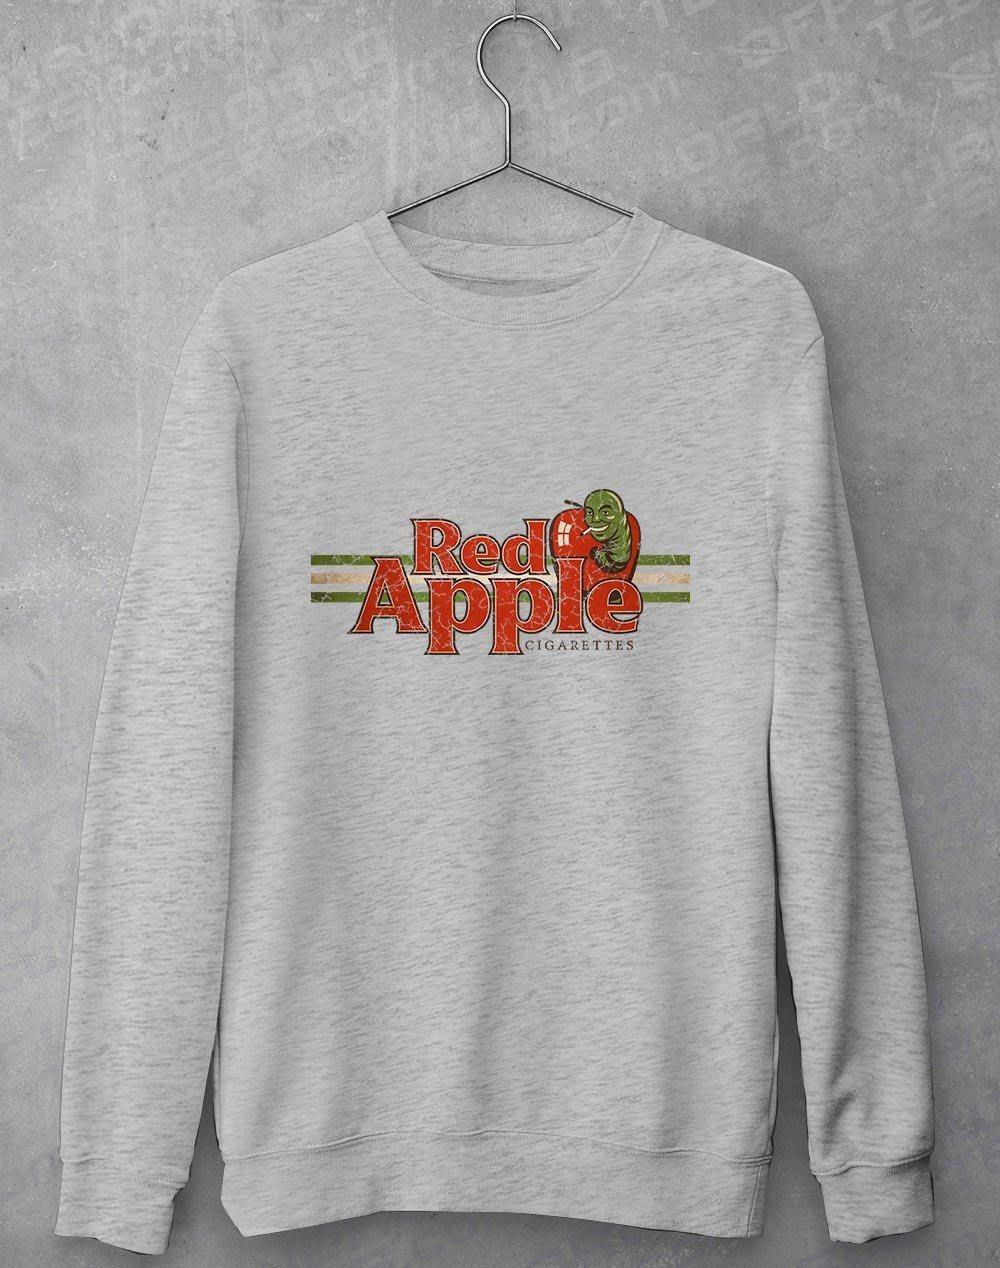 Red Apple Cigarettes Sweatshirt S / Sport  - Off World Tees